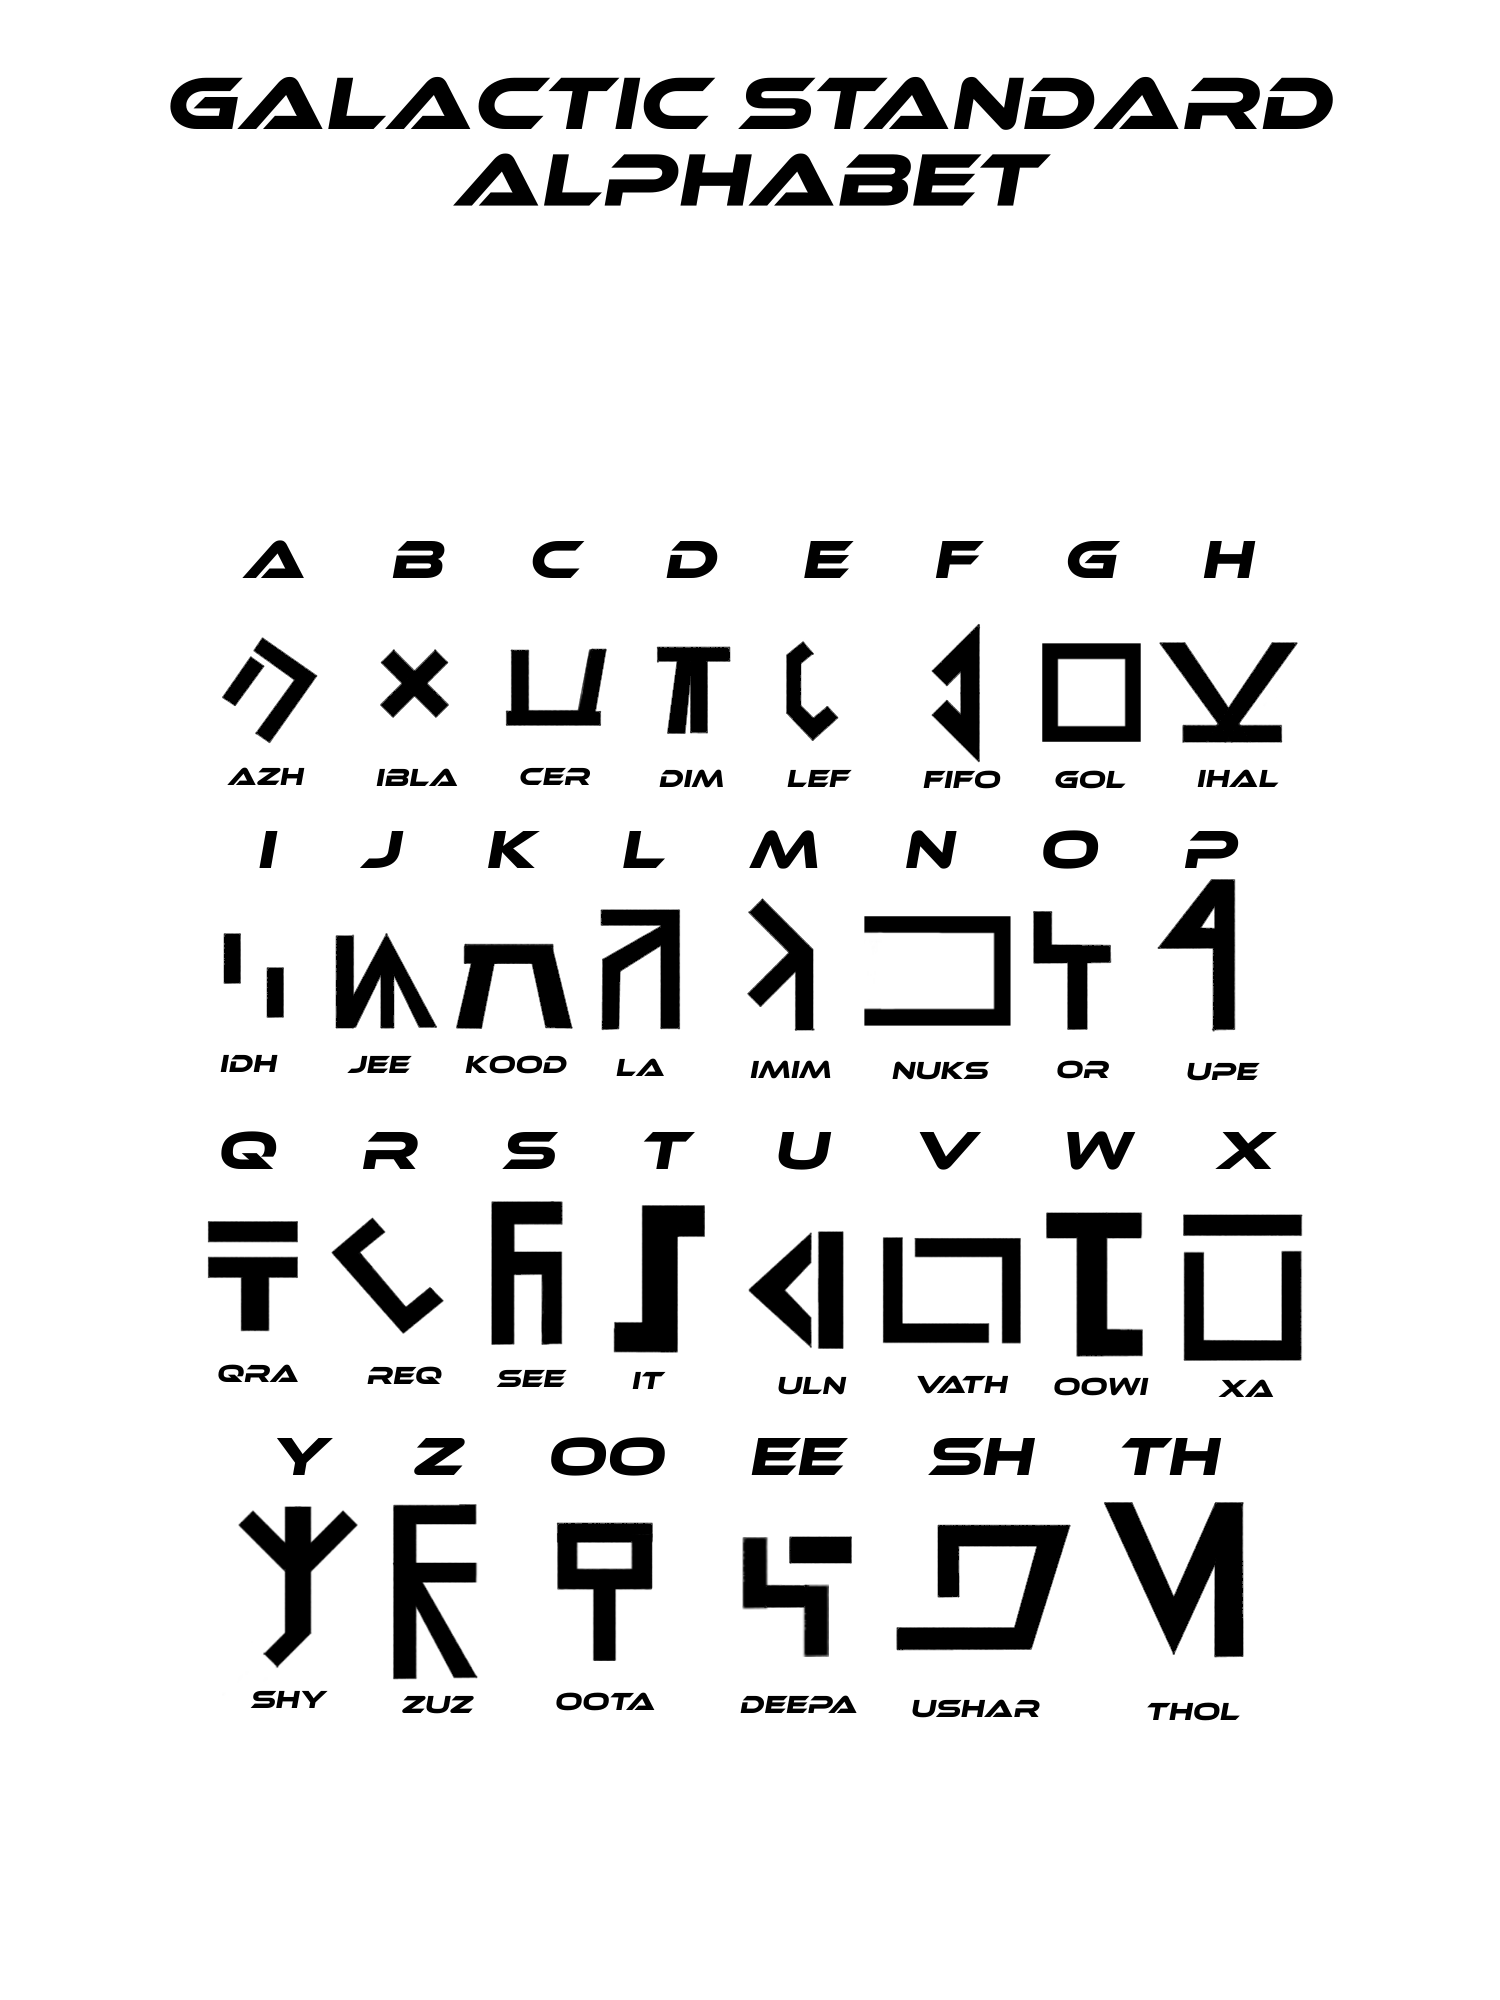 Galactic Standard Alphabet by DECLANKIRBOI on DeviantArt